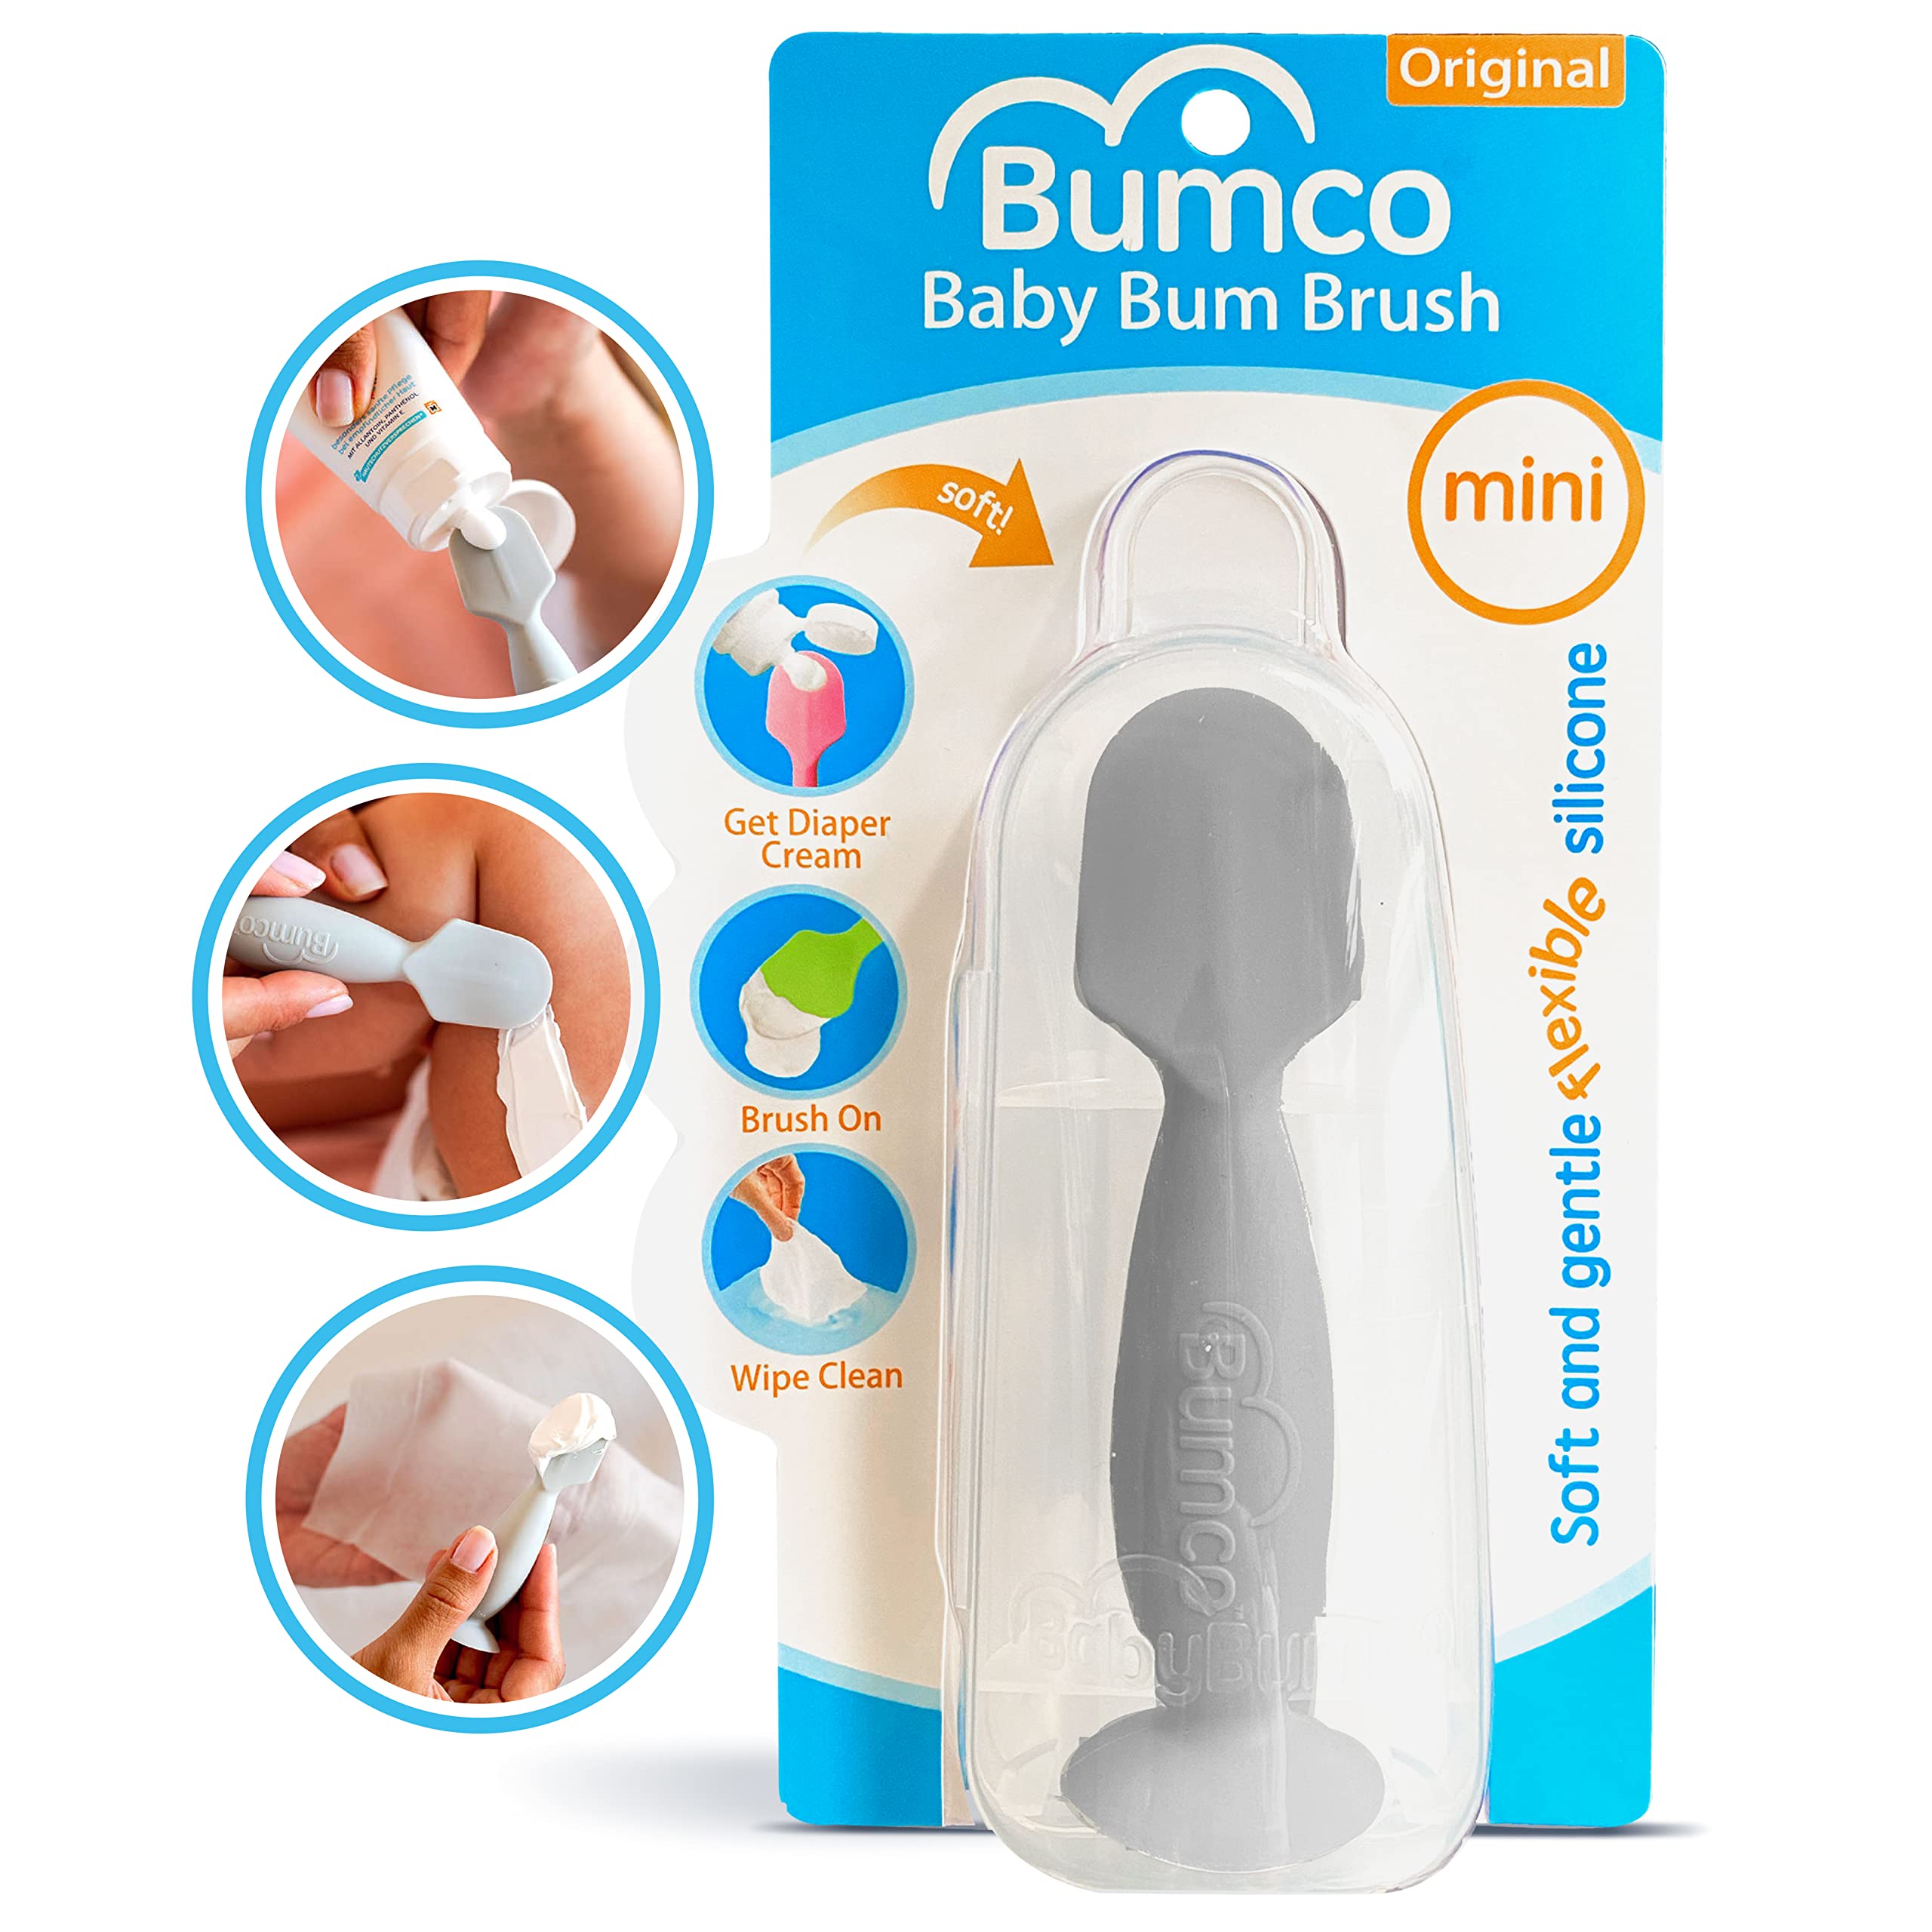 Bumco Diaper Cream Brush - Mini Baby Bum Brush with Travel Case, Baby Butt Paste Diaper Cream Spatula, Butt Paste Spatula for Baby Butt Cream, Mini Diaper Cream Applicator, Butt Spatula Baby, Gray